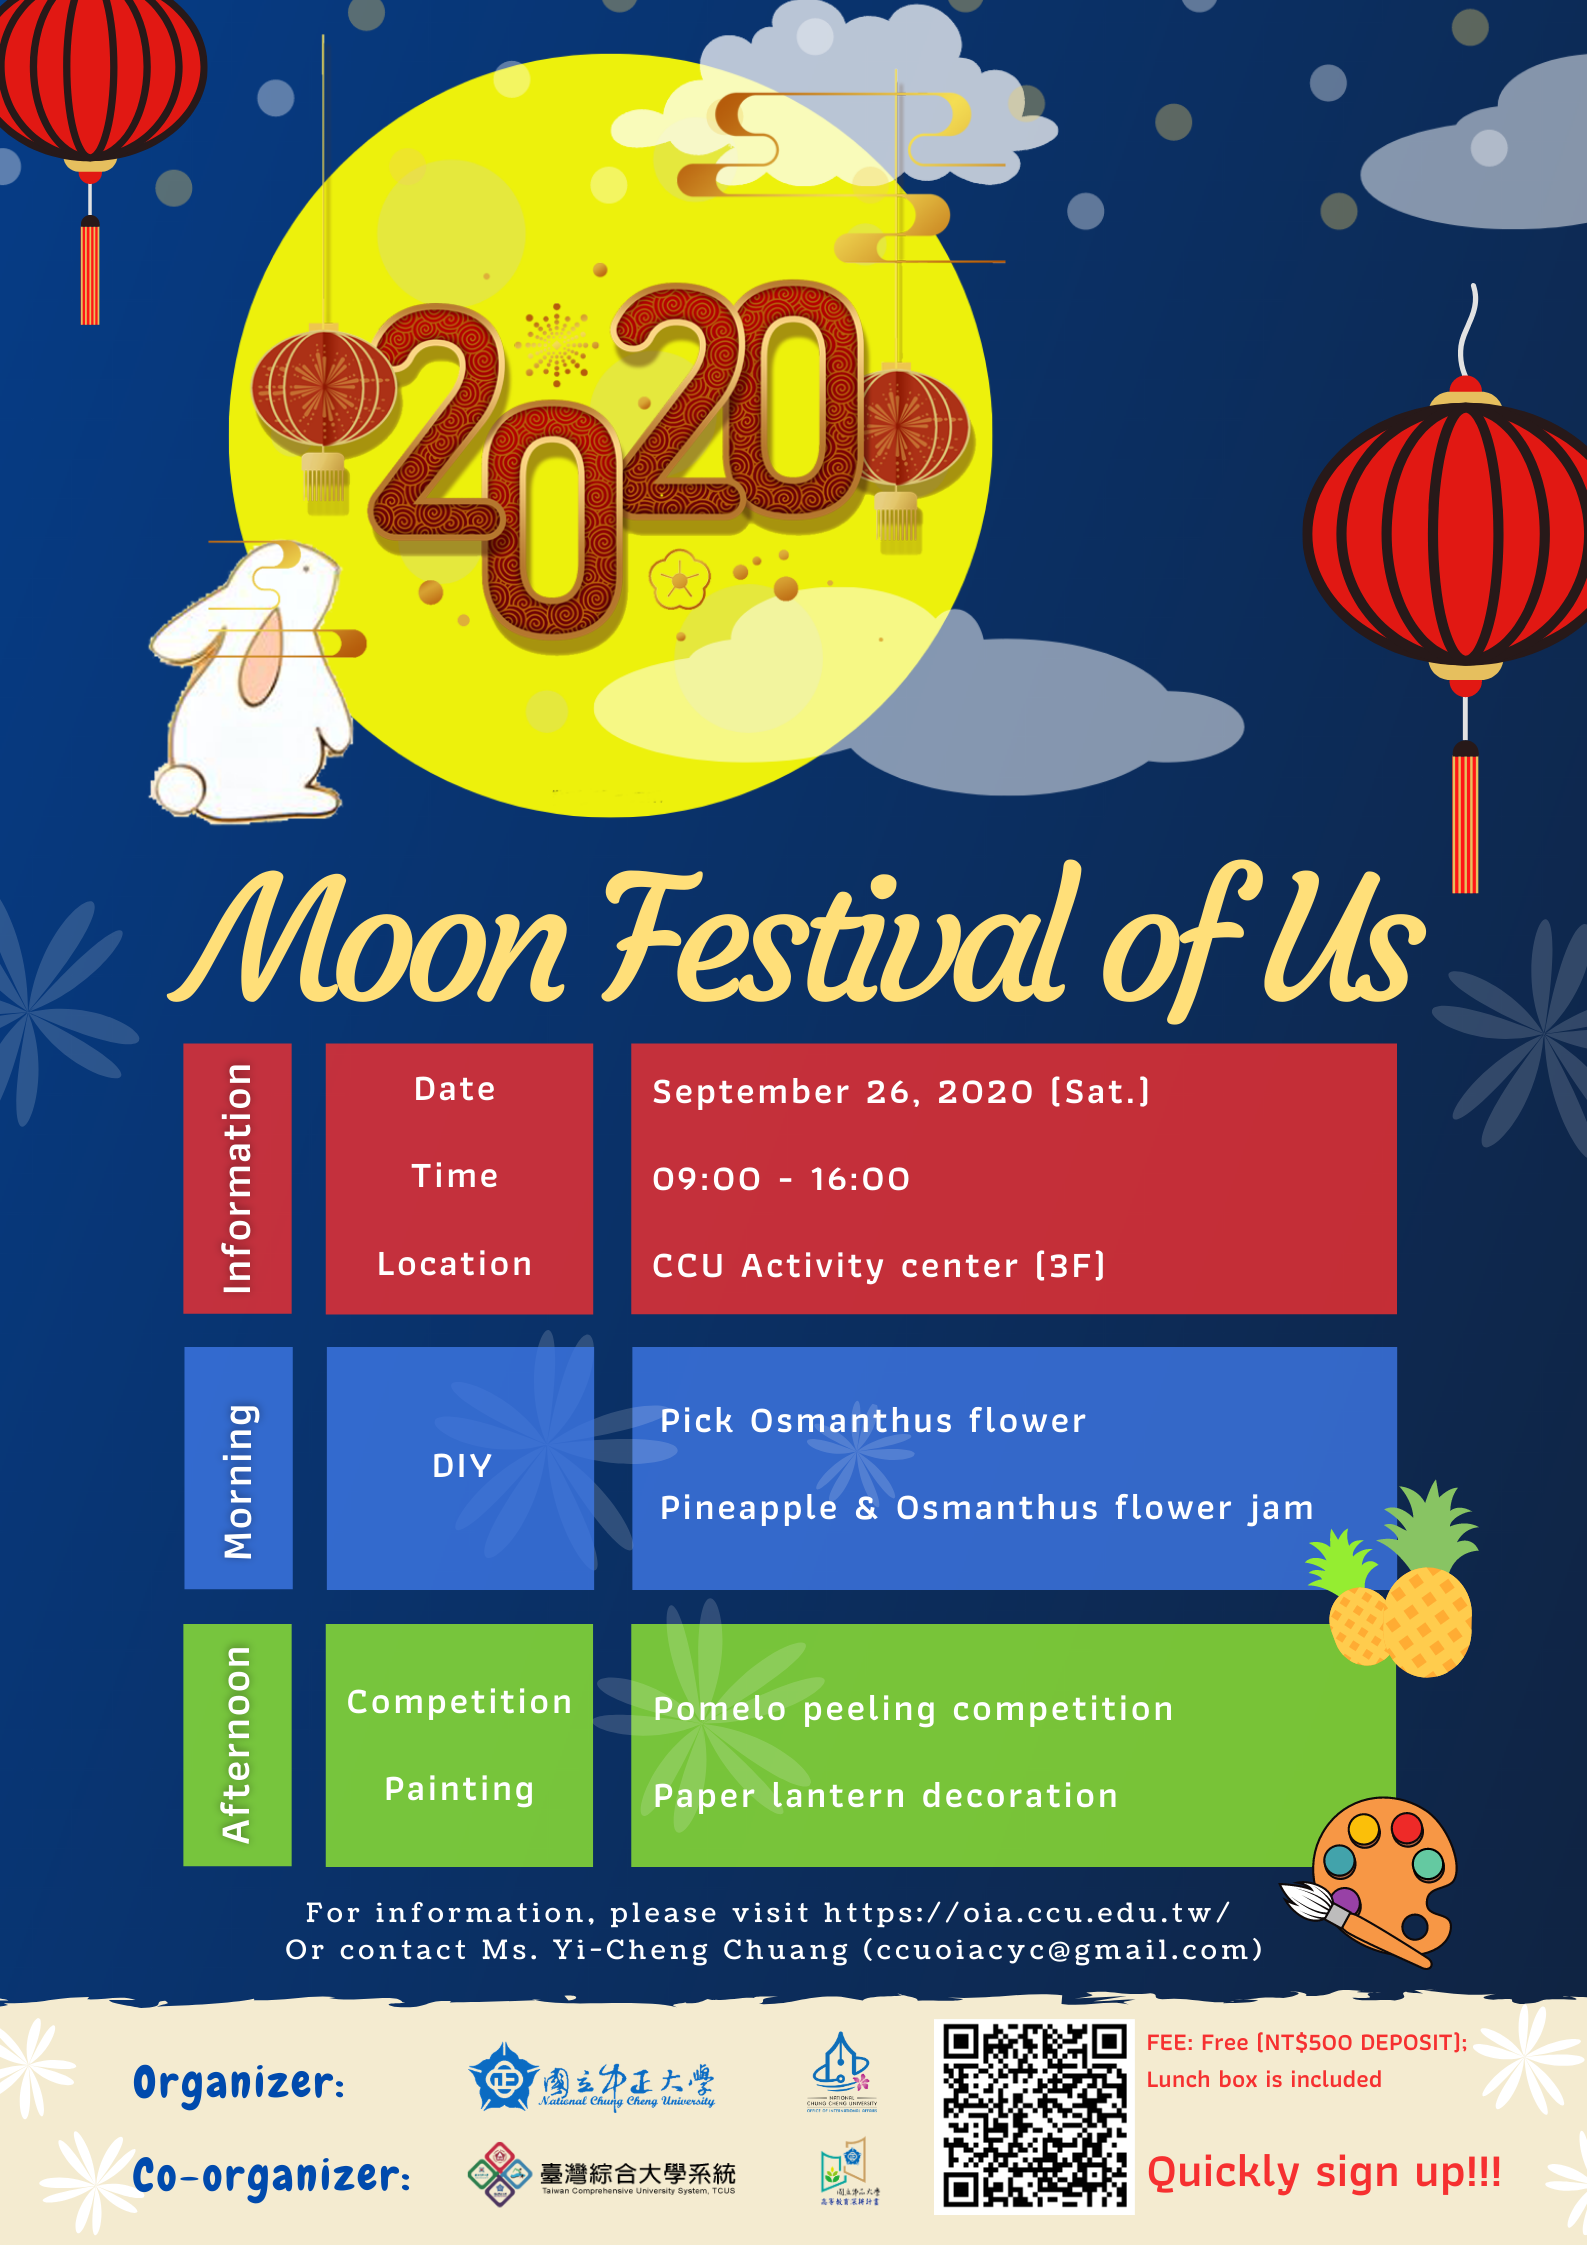 2020 Moon Festival of Us